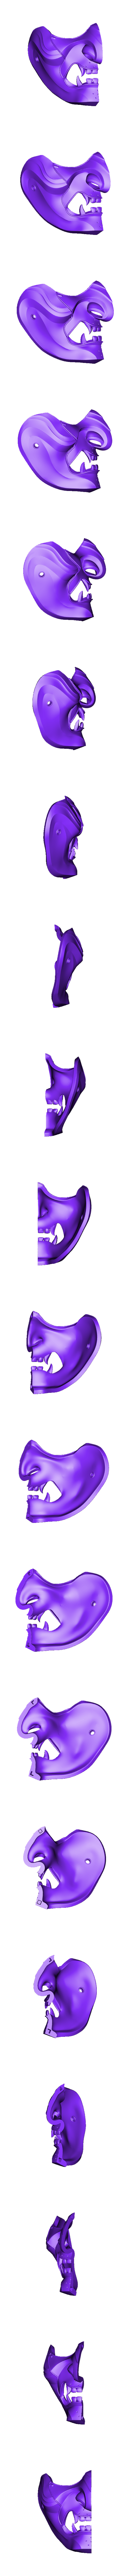 RightSide.stl Descargar archivo OBJ GHOST OF TSUSHIMA - Ghost Mask - Fan art cosplay 3D print • Diseño para imprimir en 3D, 3DCraftsman